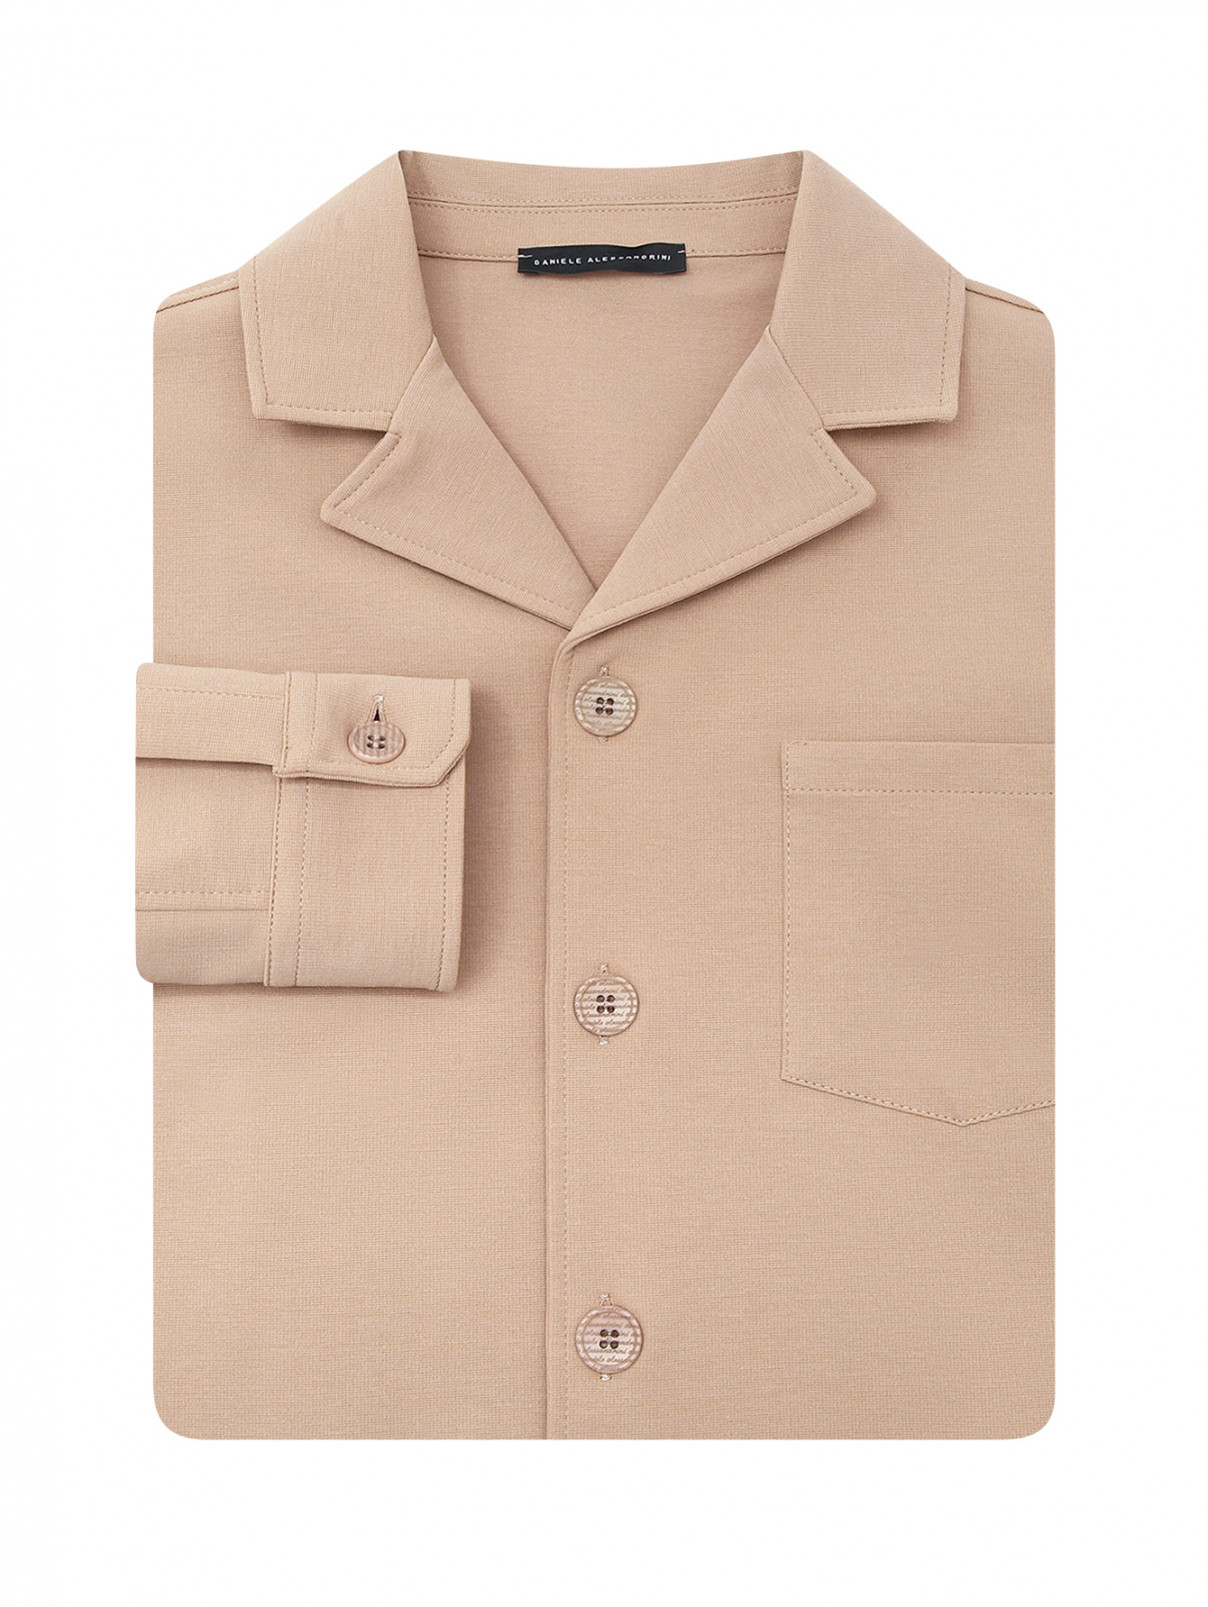 Однотонная рубашка с карманами Daniele Alessandrini  –  Общий вид  – Цвет:  Бежевый